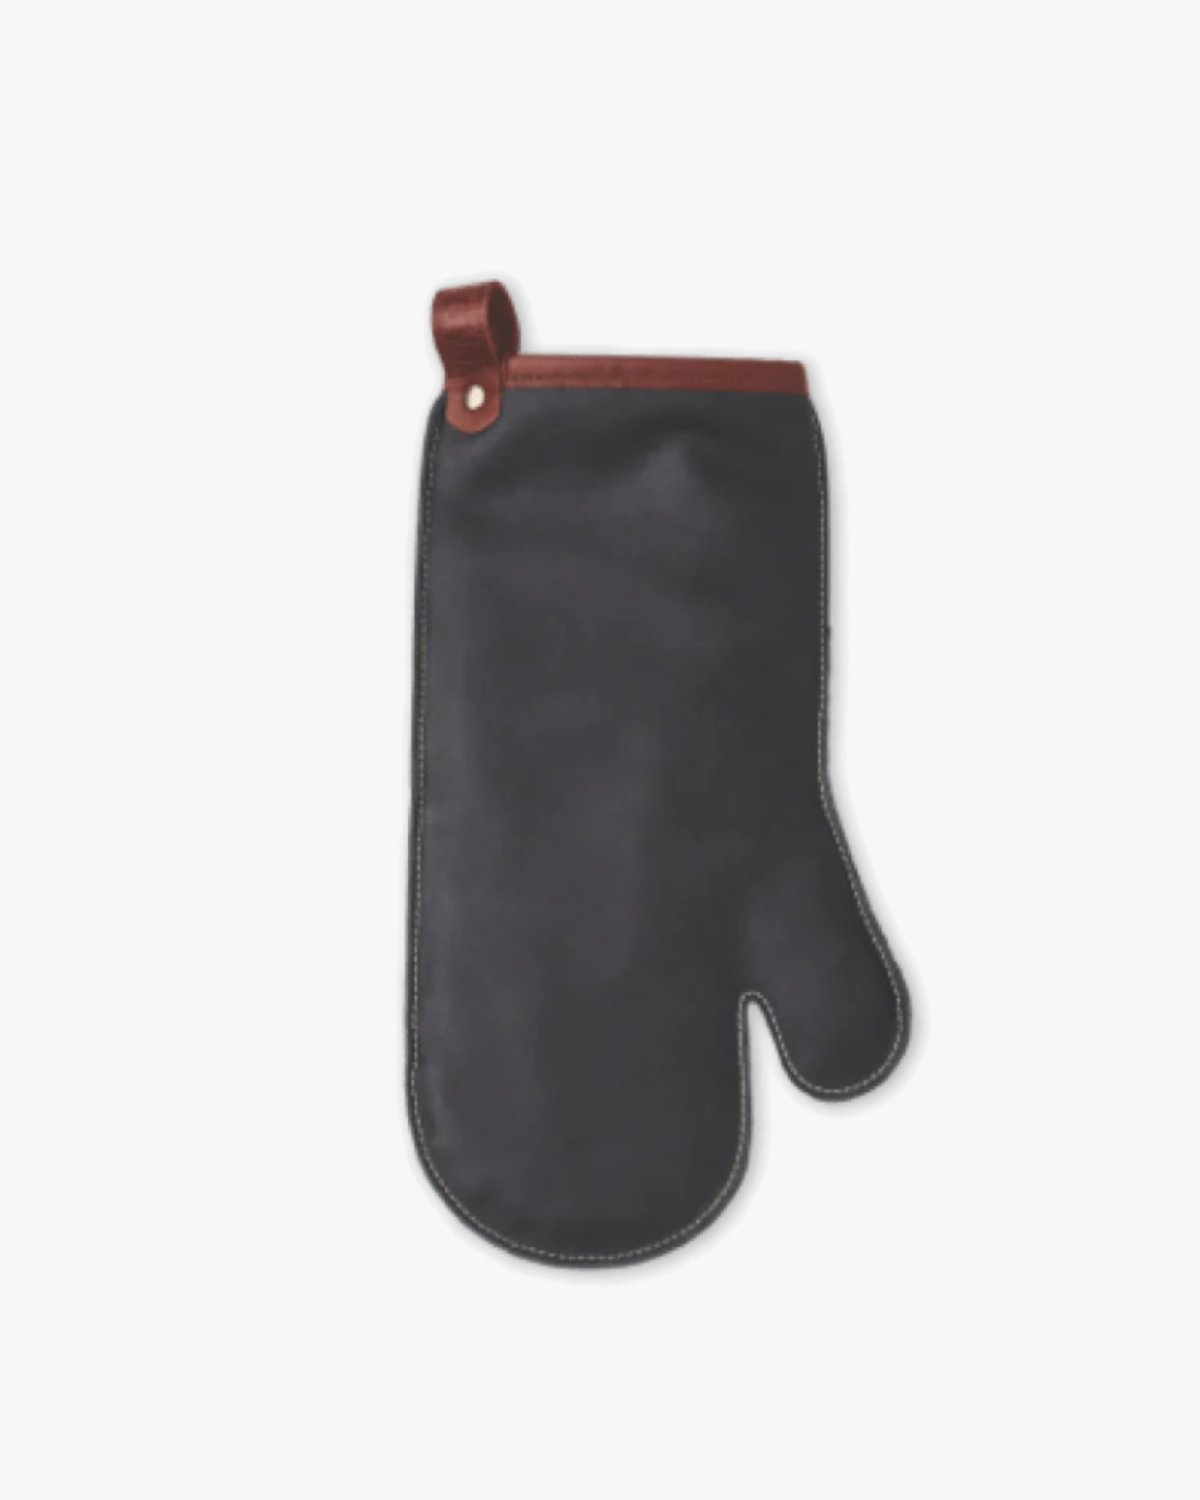 Delivita Leather Glove - The Outdoor Kitchen Company Ltd